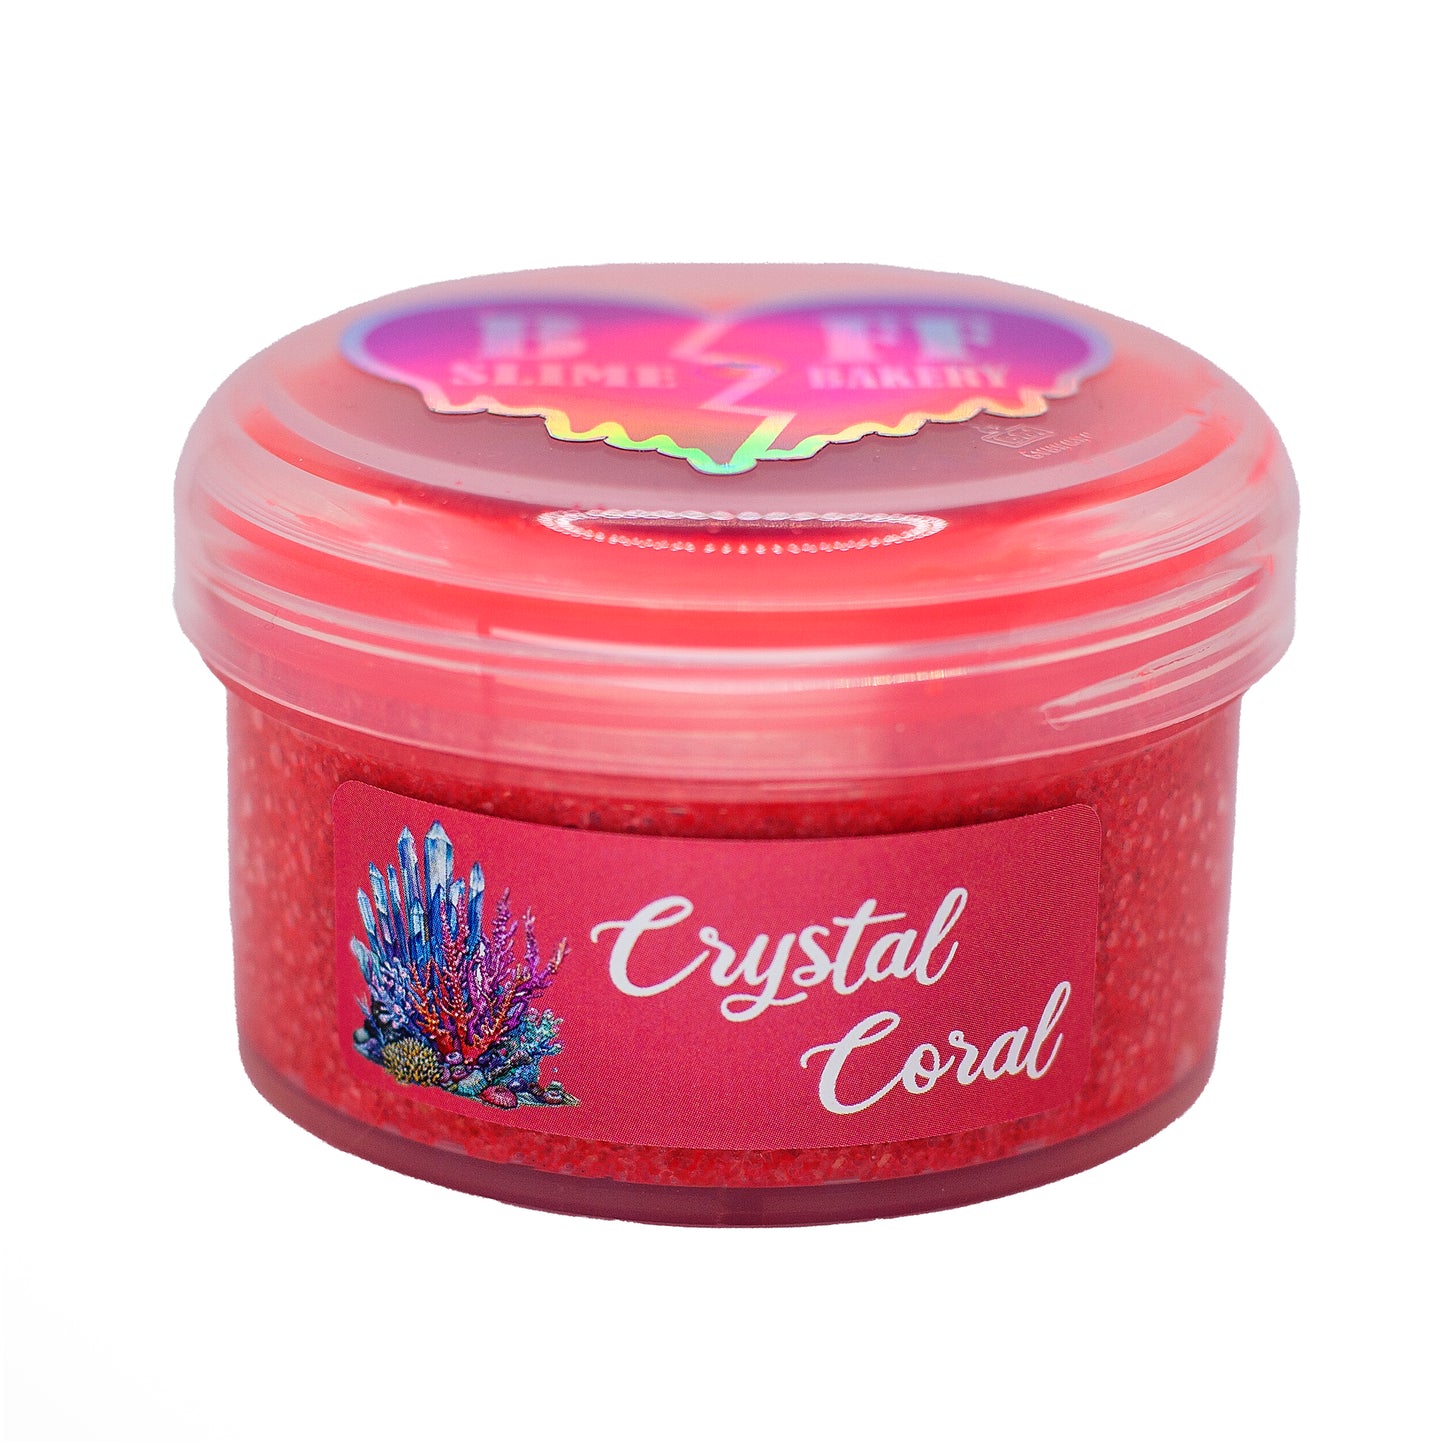 Crystal Coral